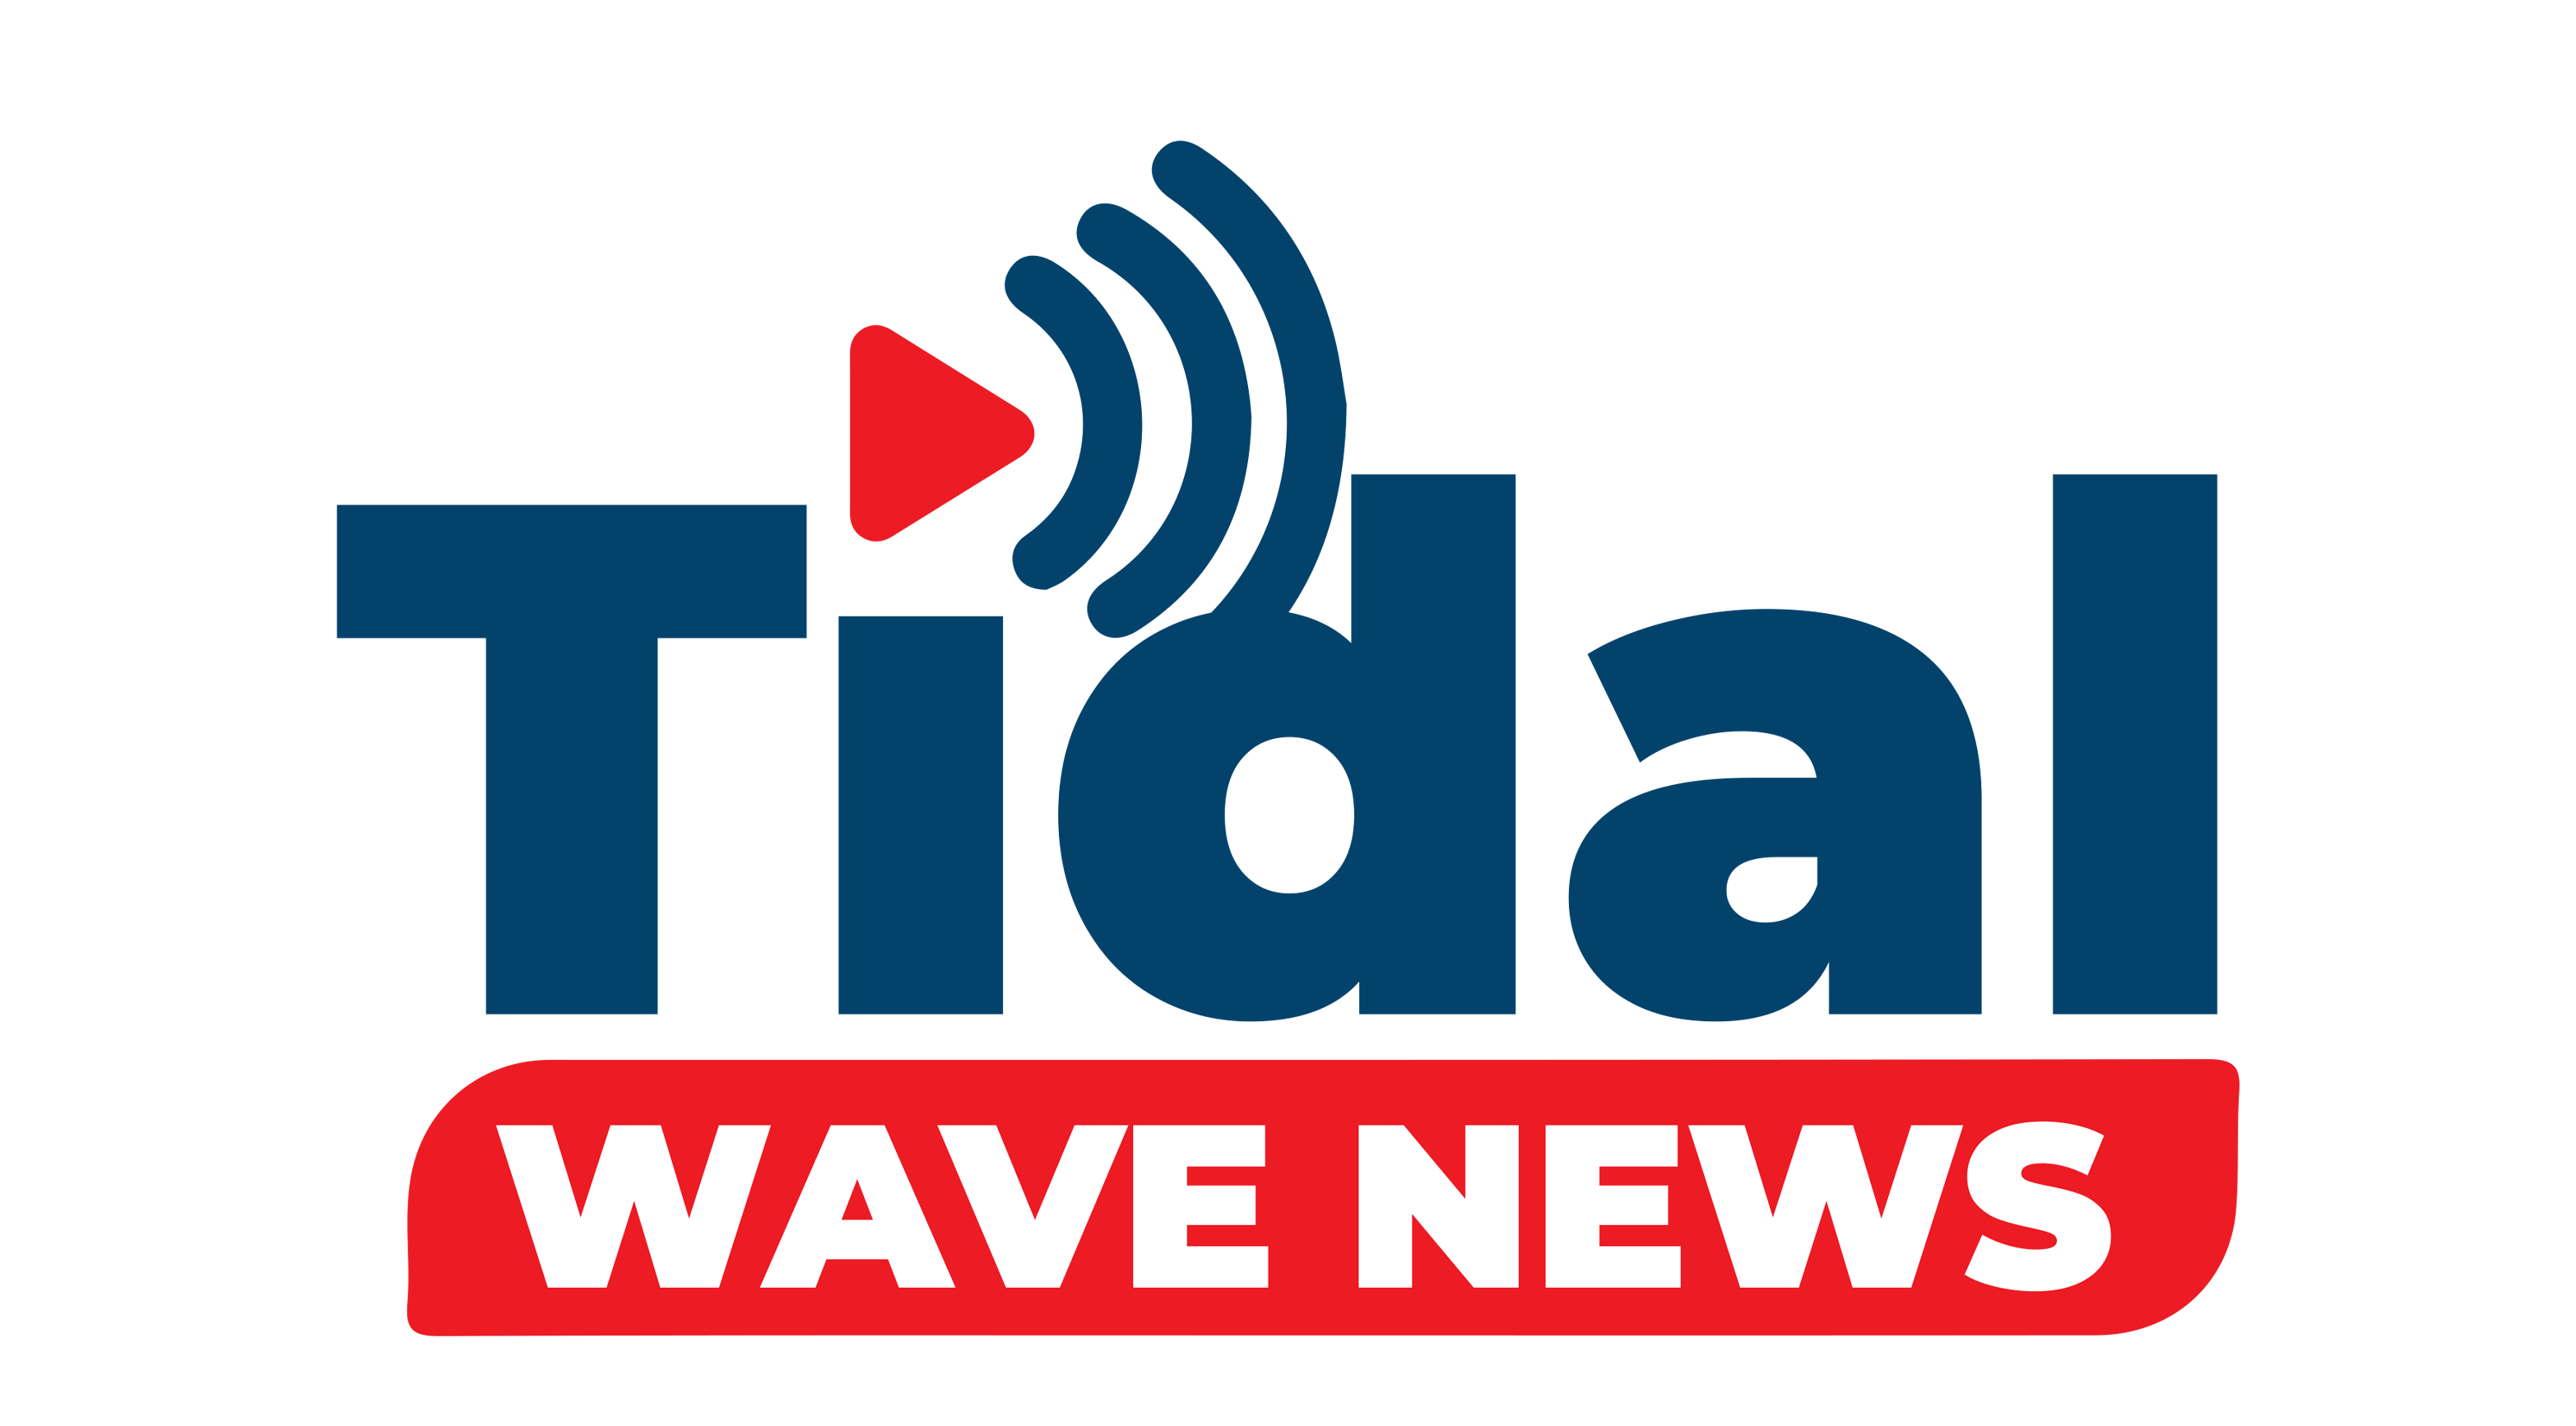 Tidal Wave News